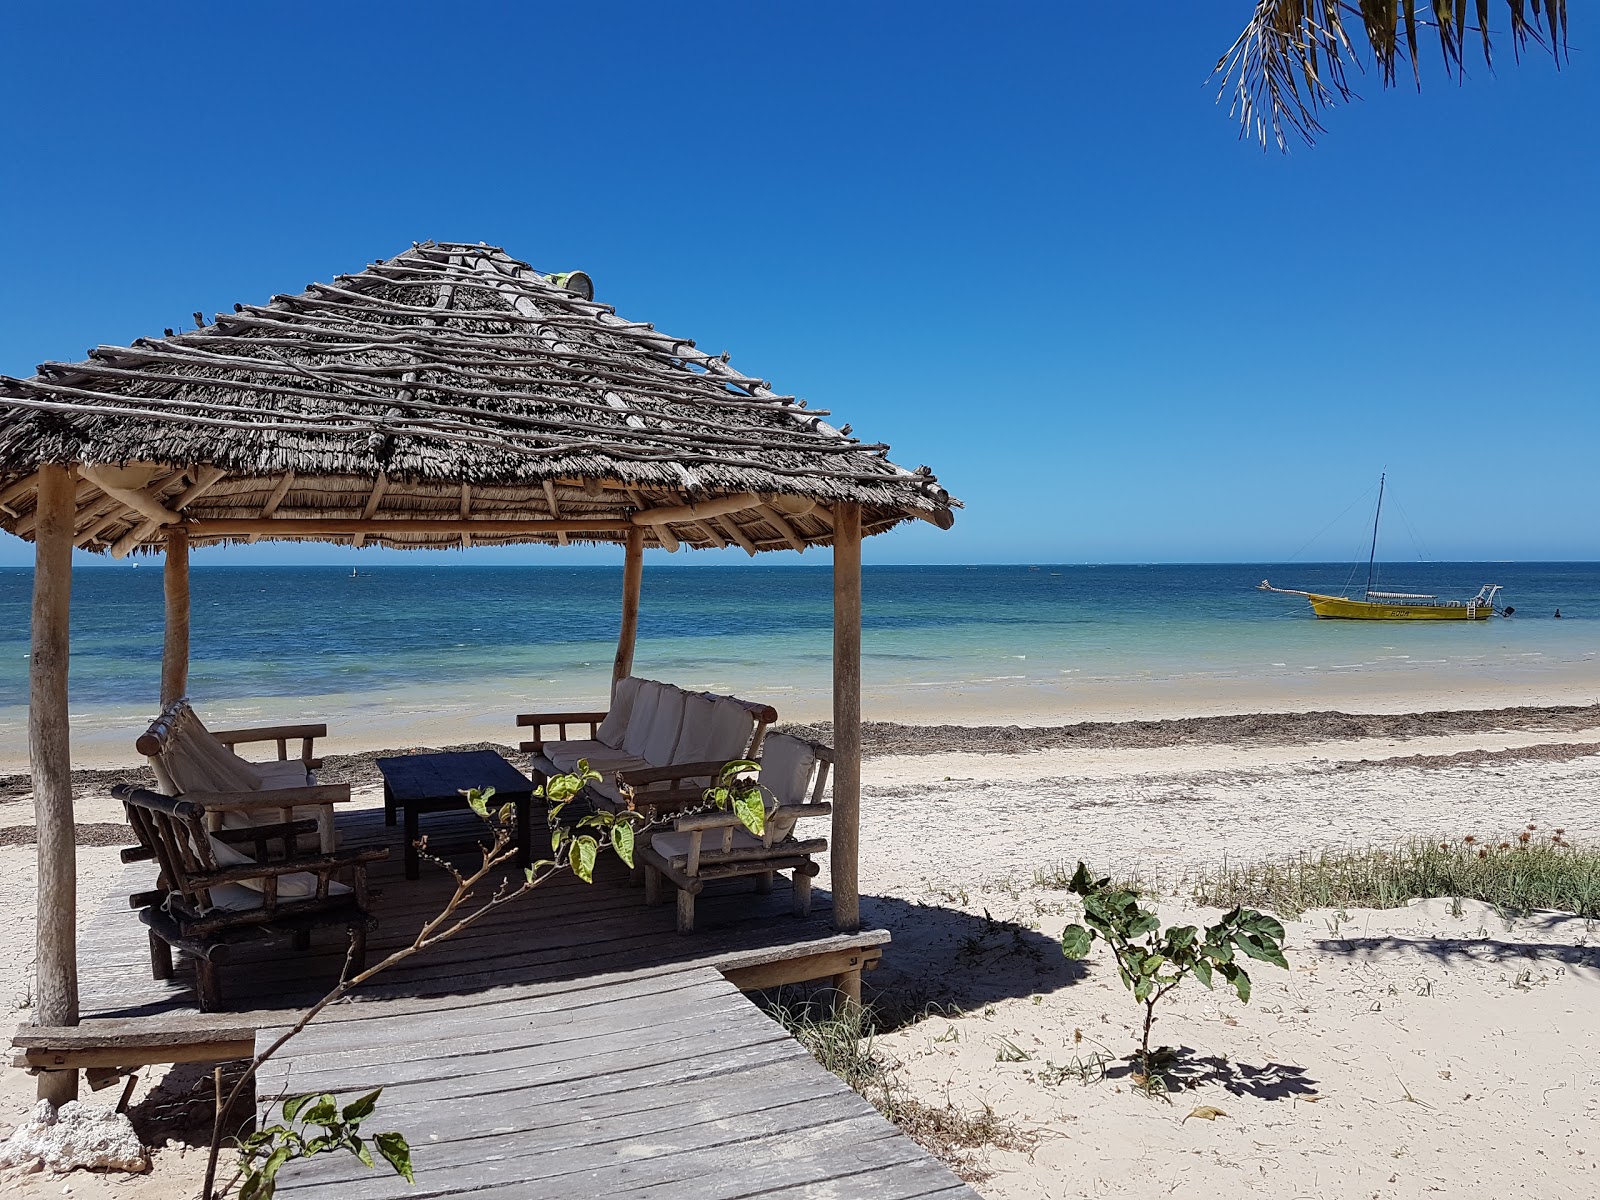 Foto de Ifty Beach - lugar popular entre os apreciadores de relaxamento